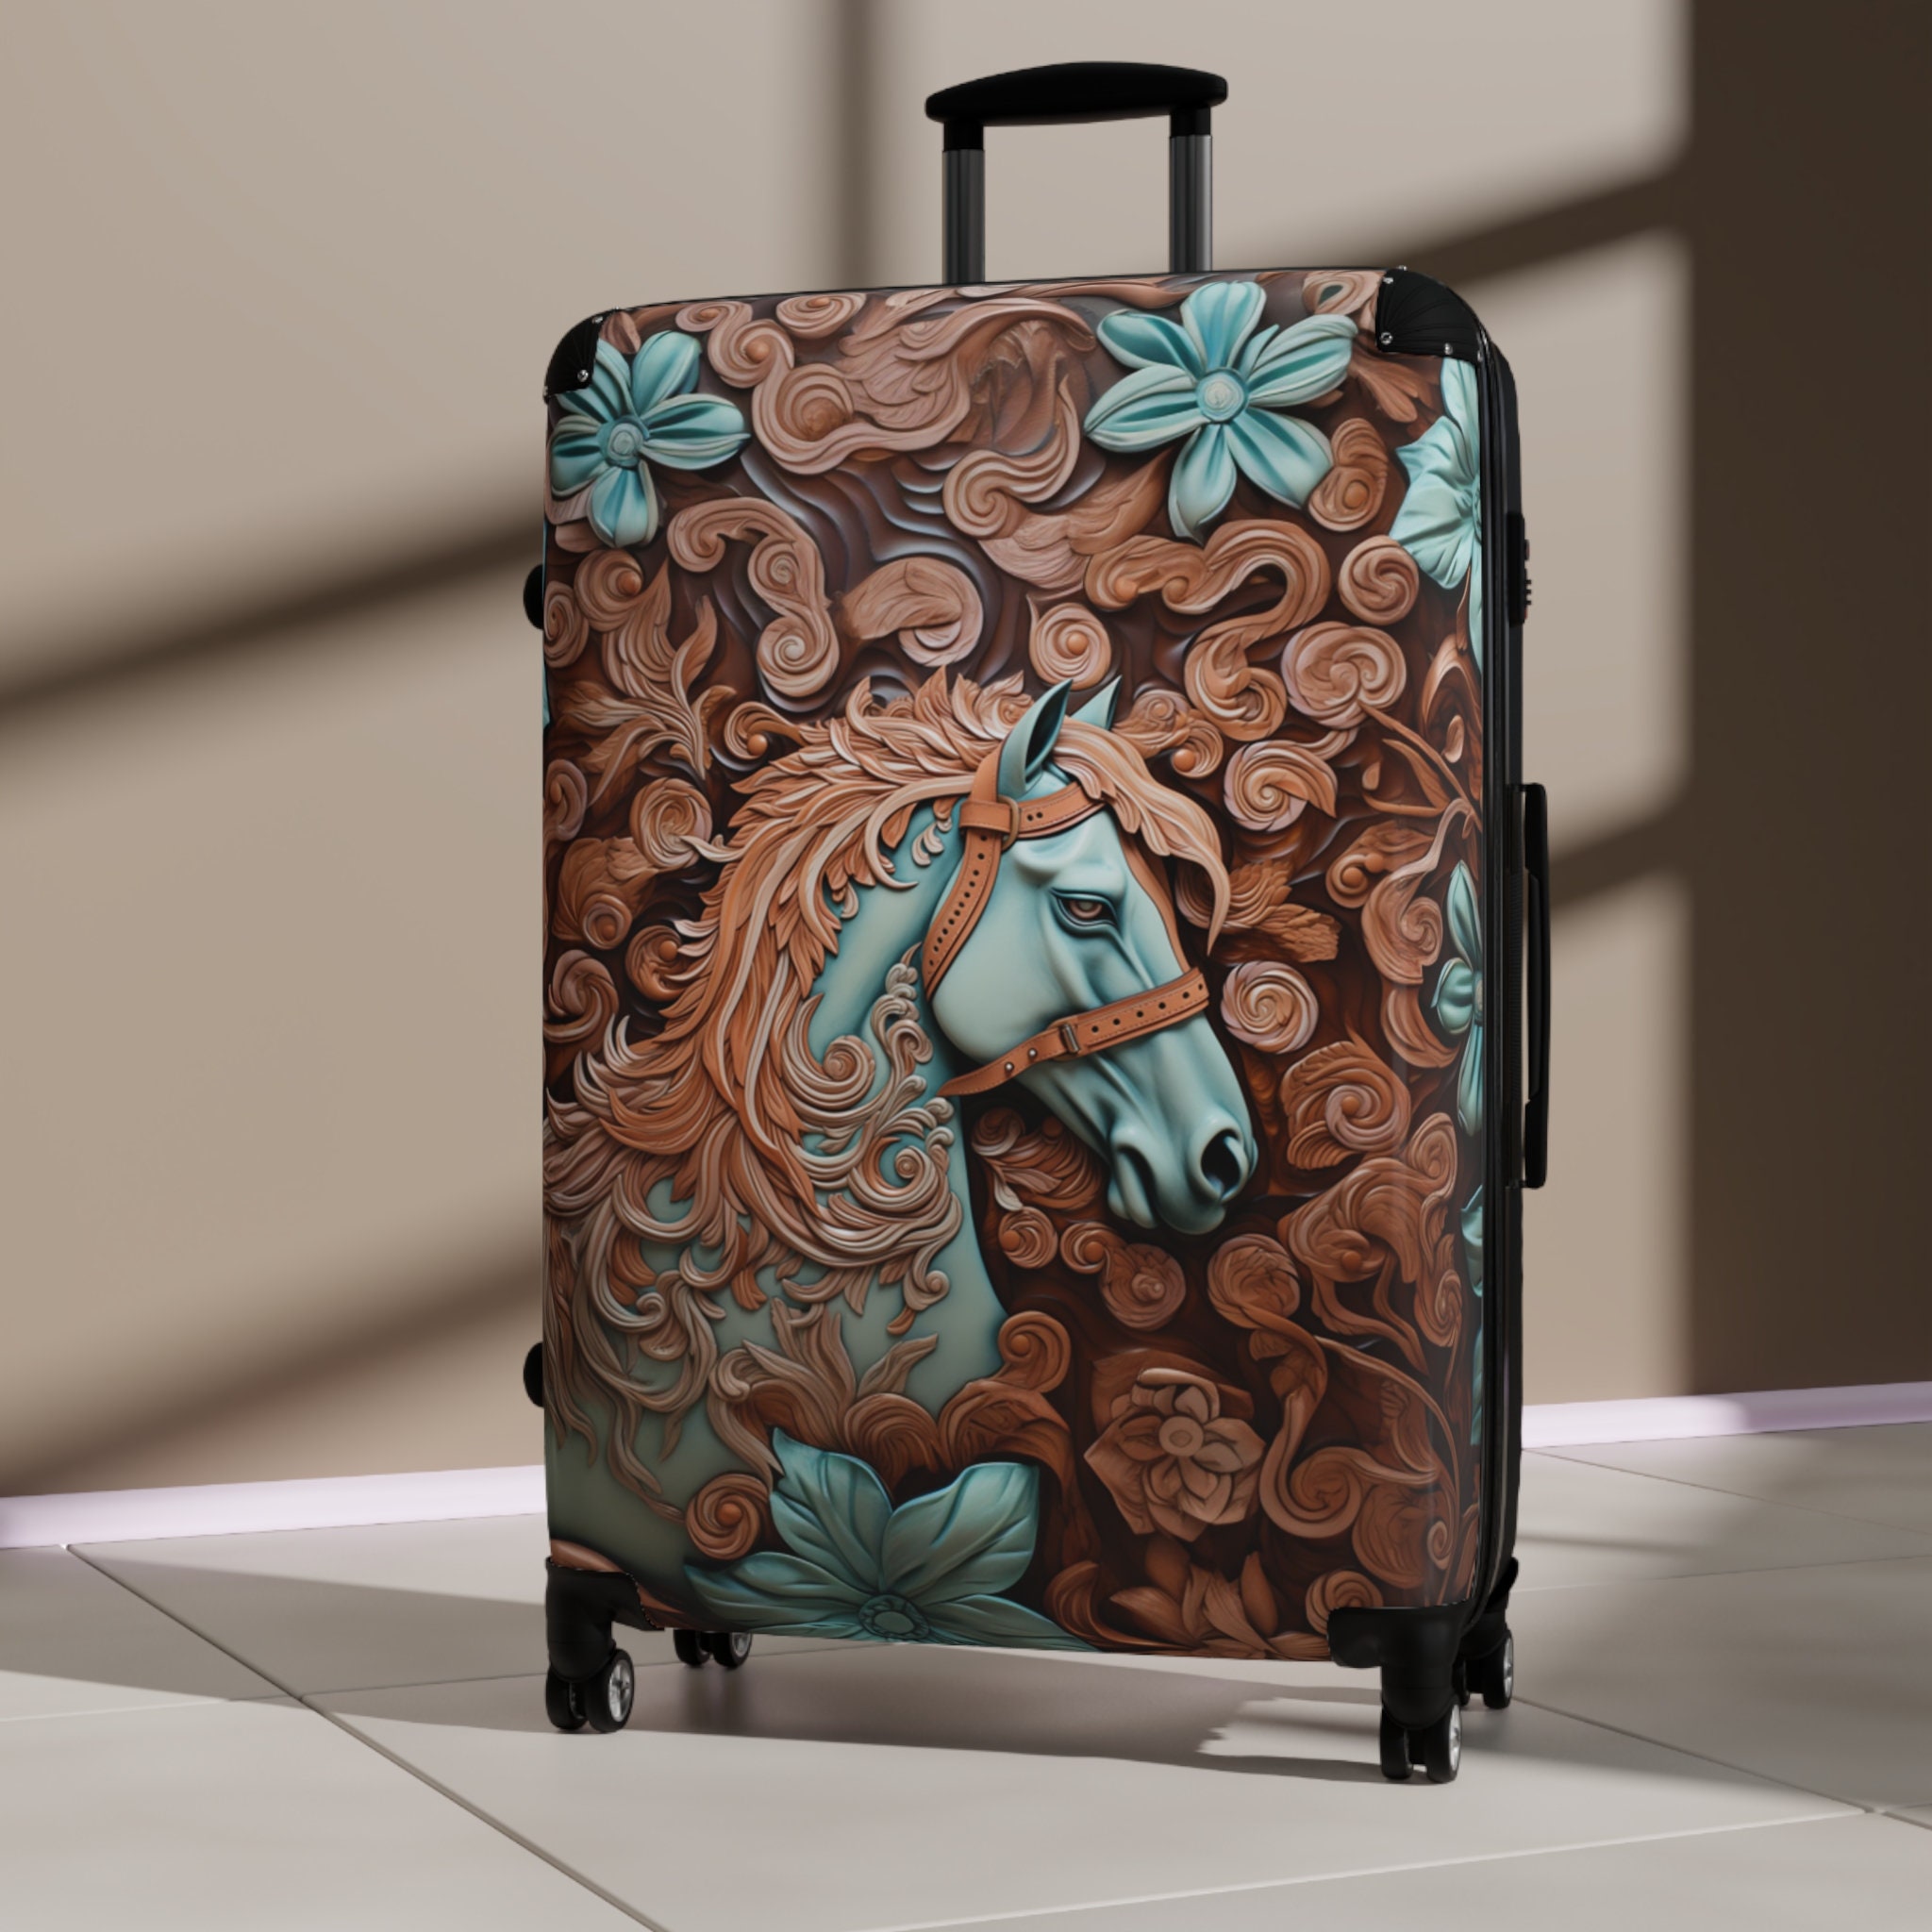 SDF Louisville Luggage Tag II Tote Bag by Naxart Studio - Fine Art